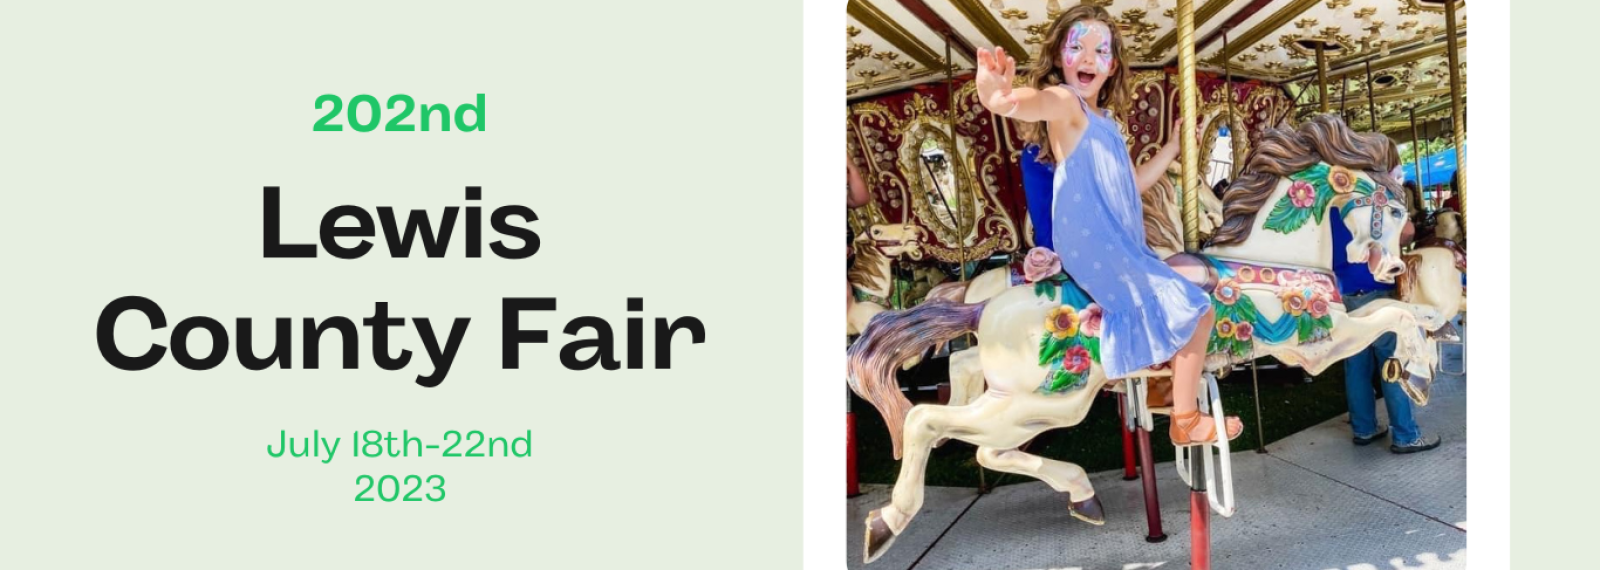 Lewis County Fair website